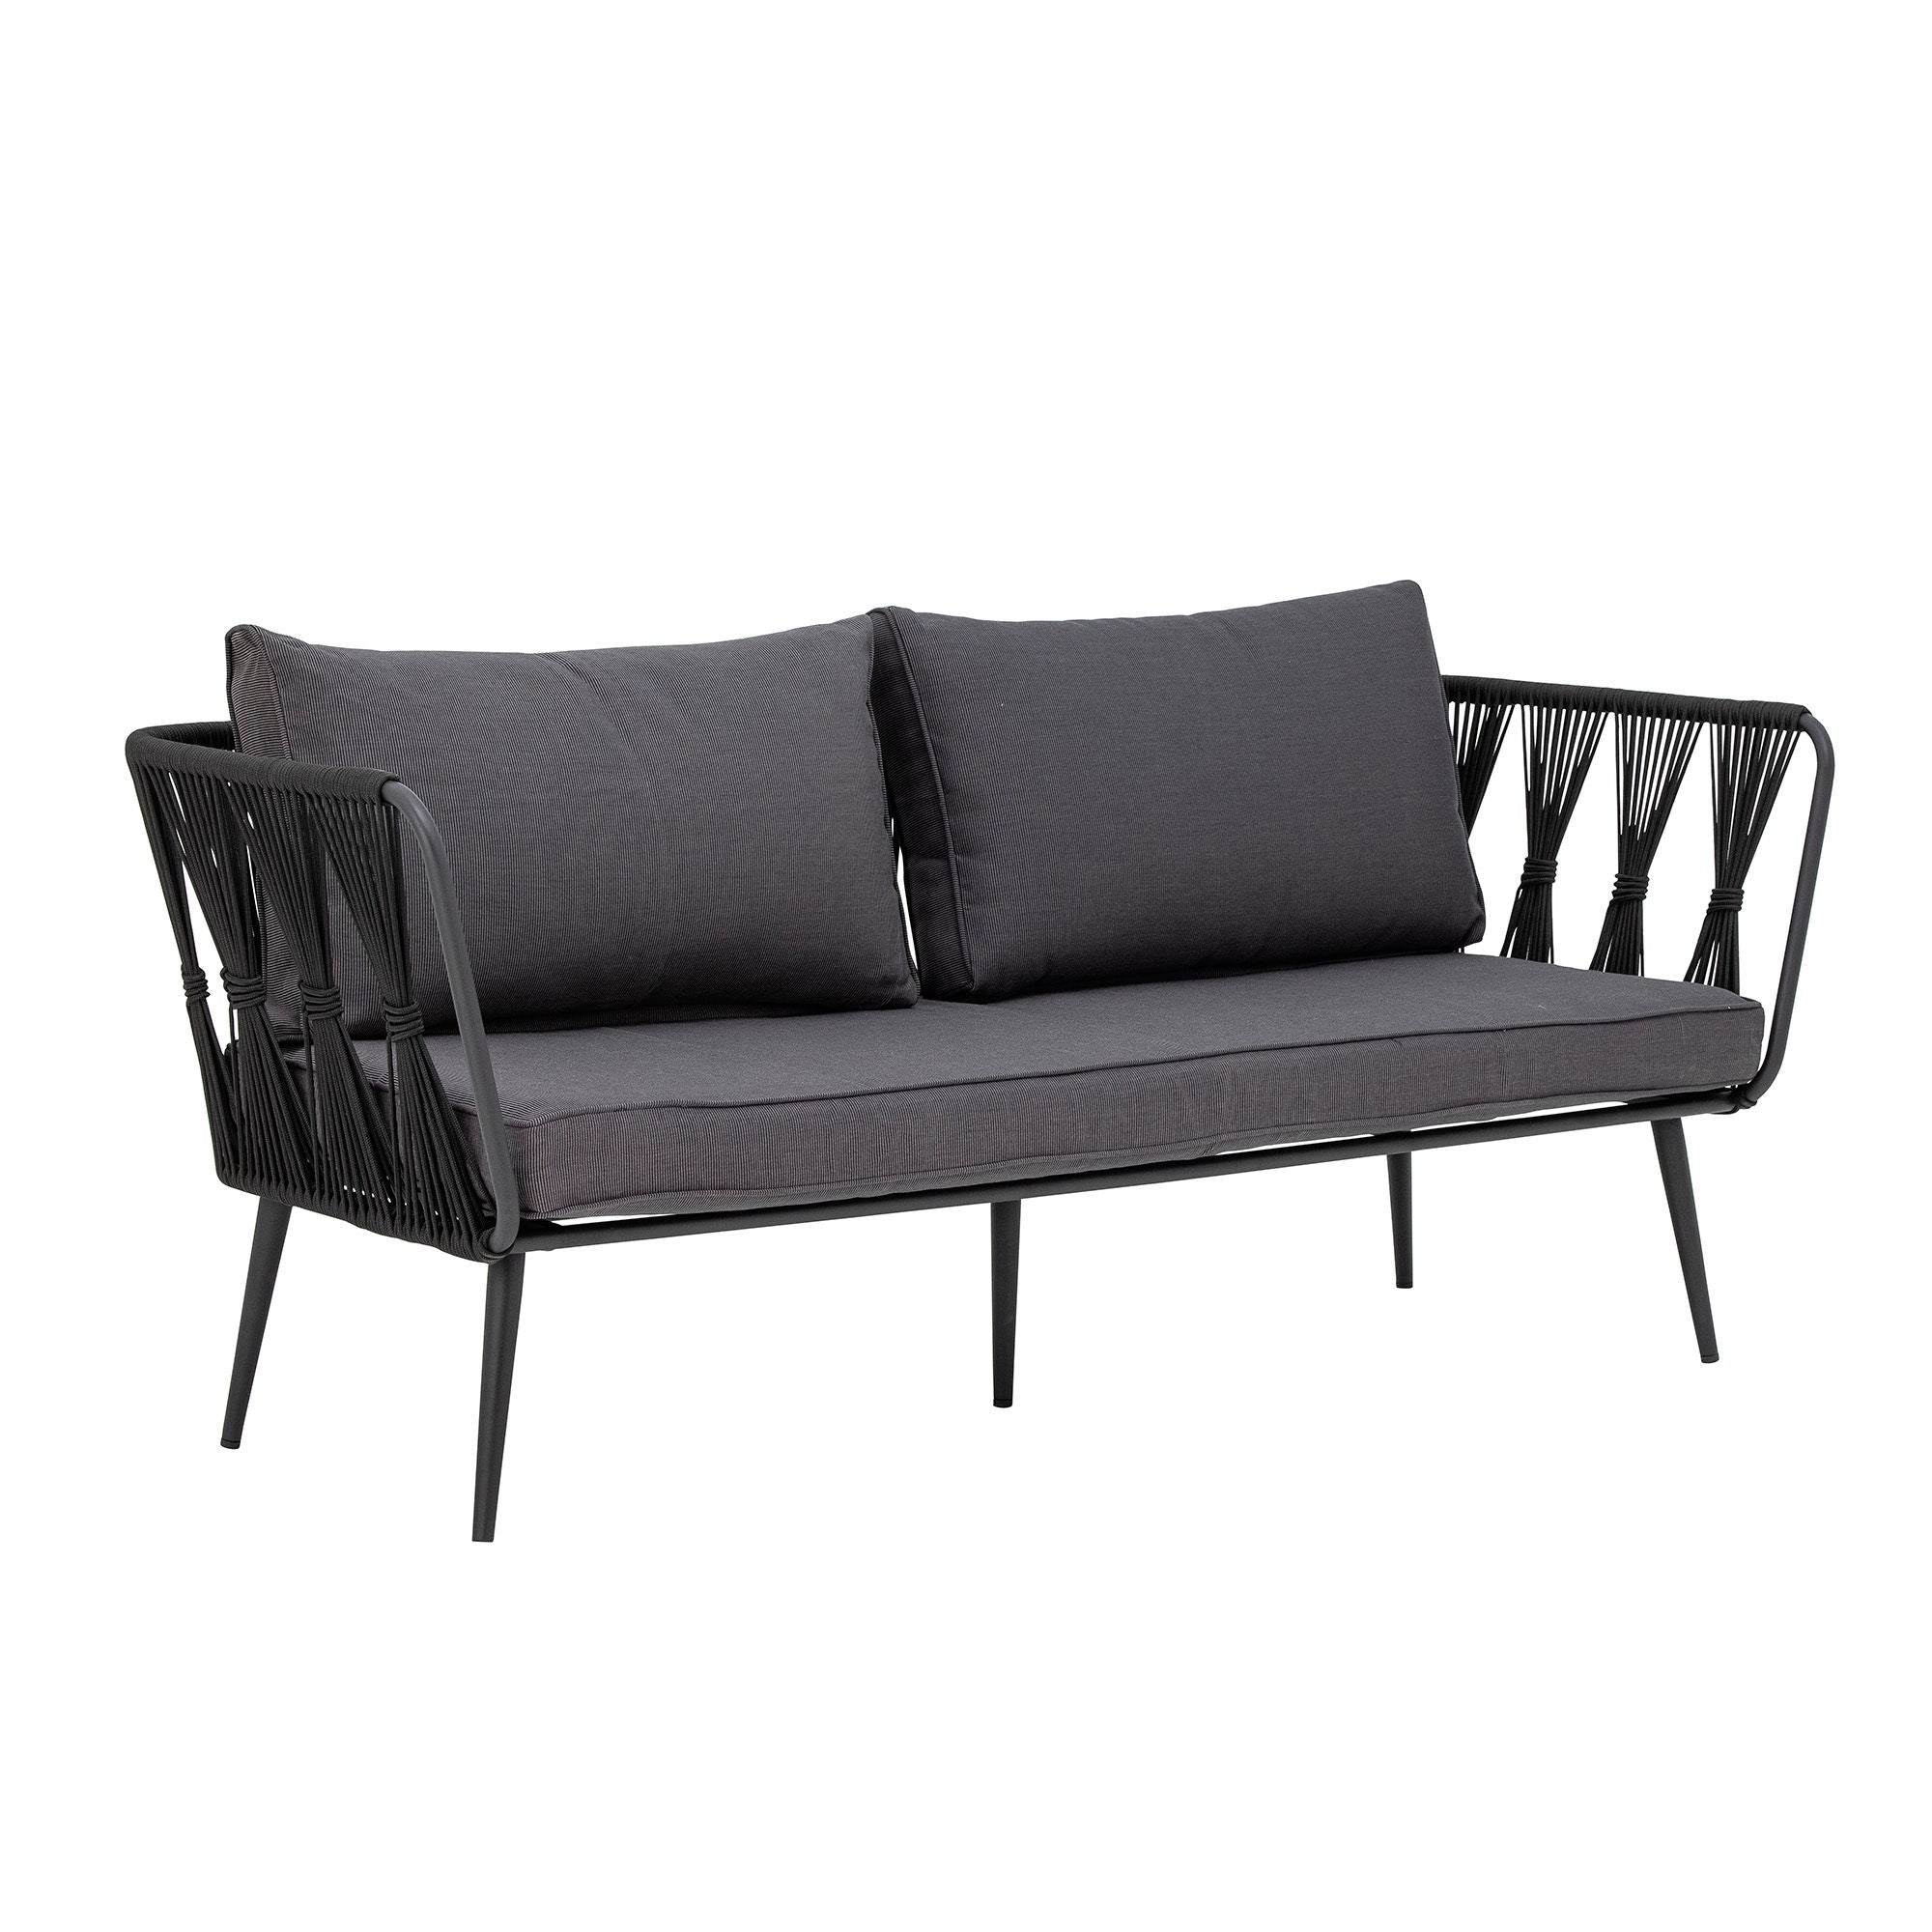 Bloomingville -padon -sohva, musta, metalli